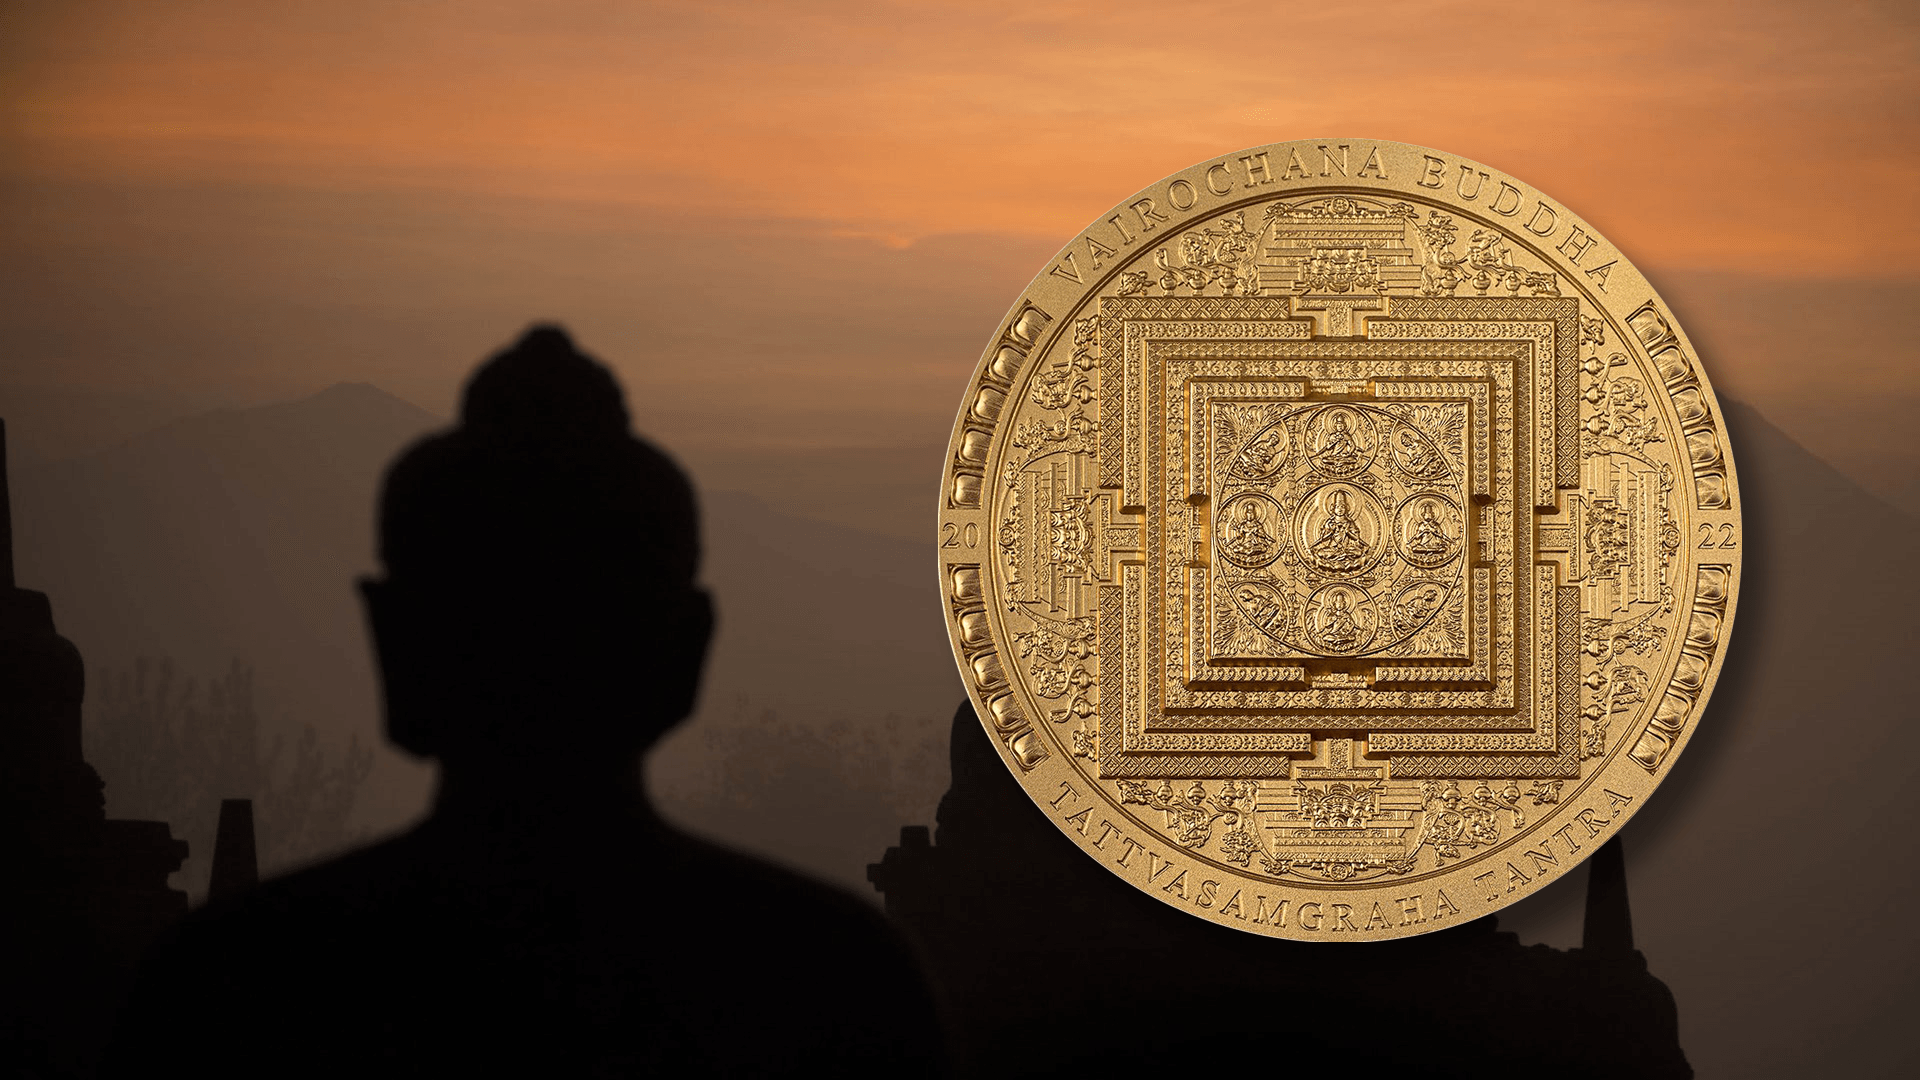 VAIROCHANA BUDDHA MANDALA Archeology Symbolism Gilded 3 Oz Silver Coin 2000 Togrog Mongolia 2022 - PARTHAVA COIN